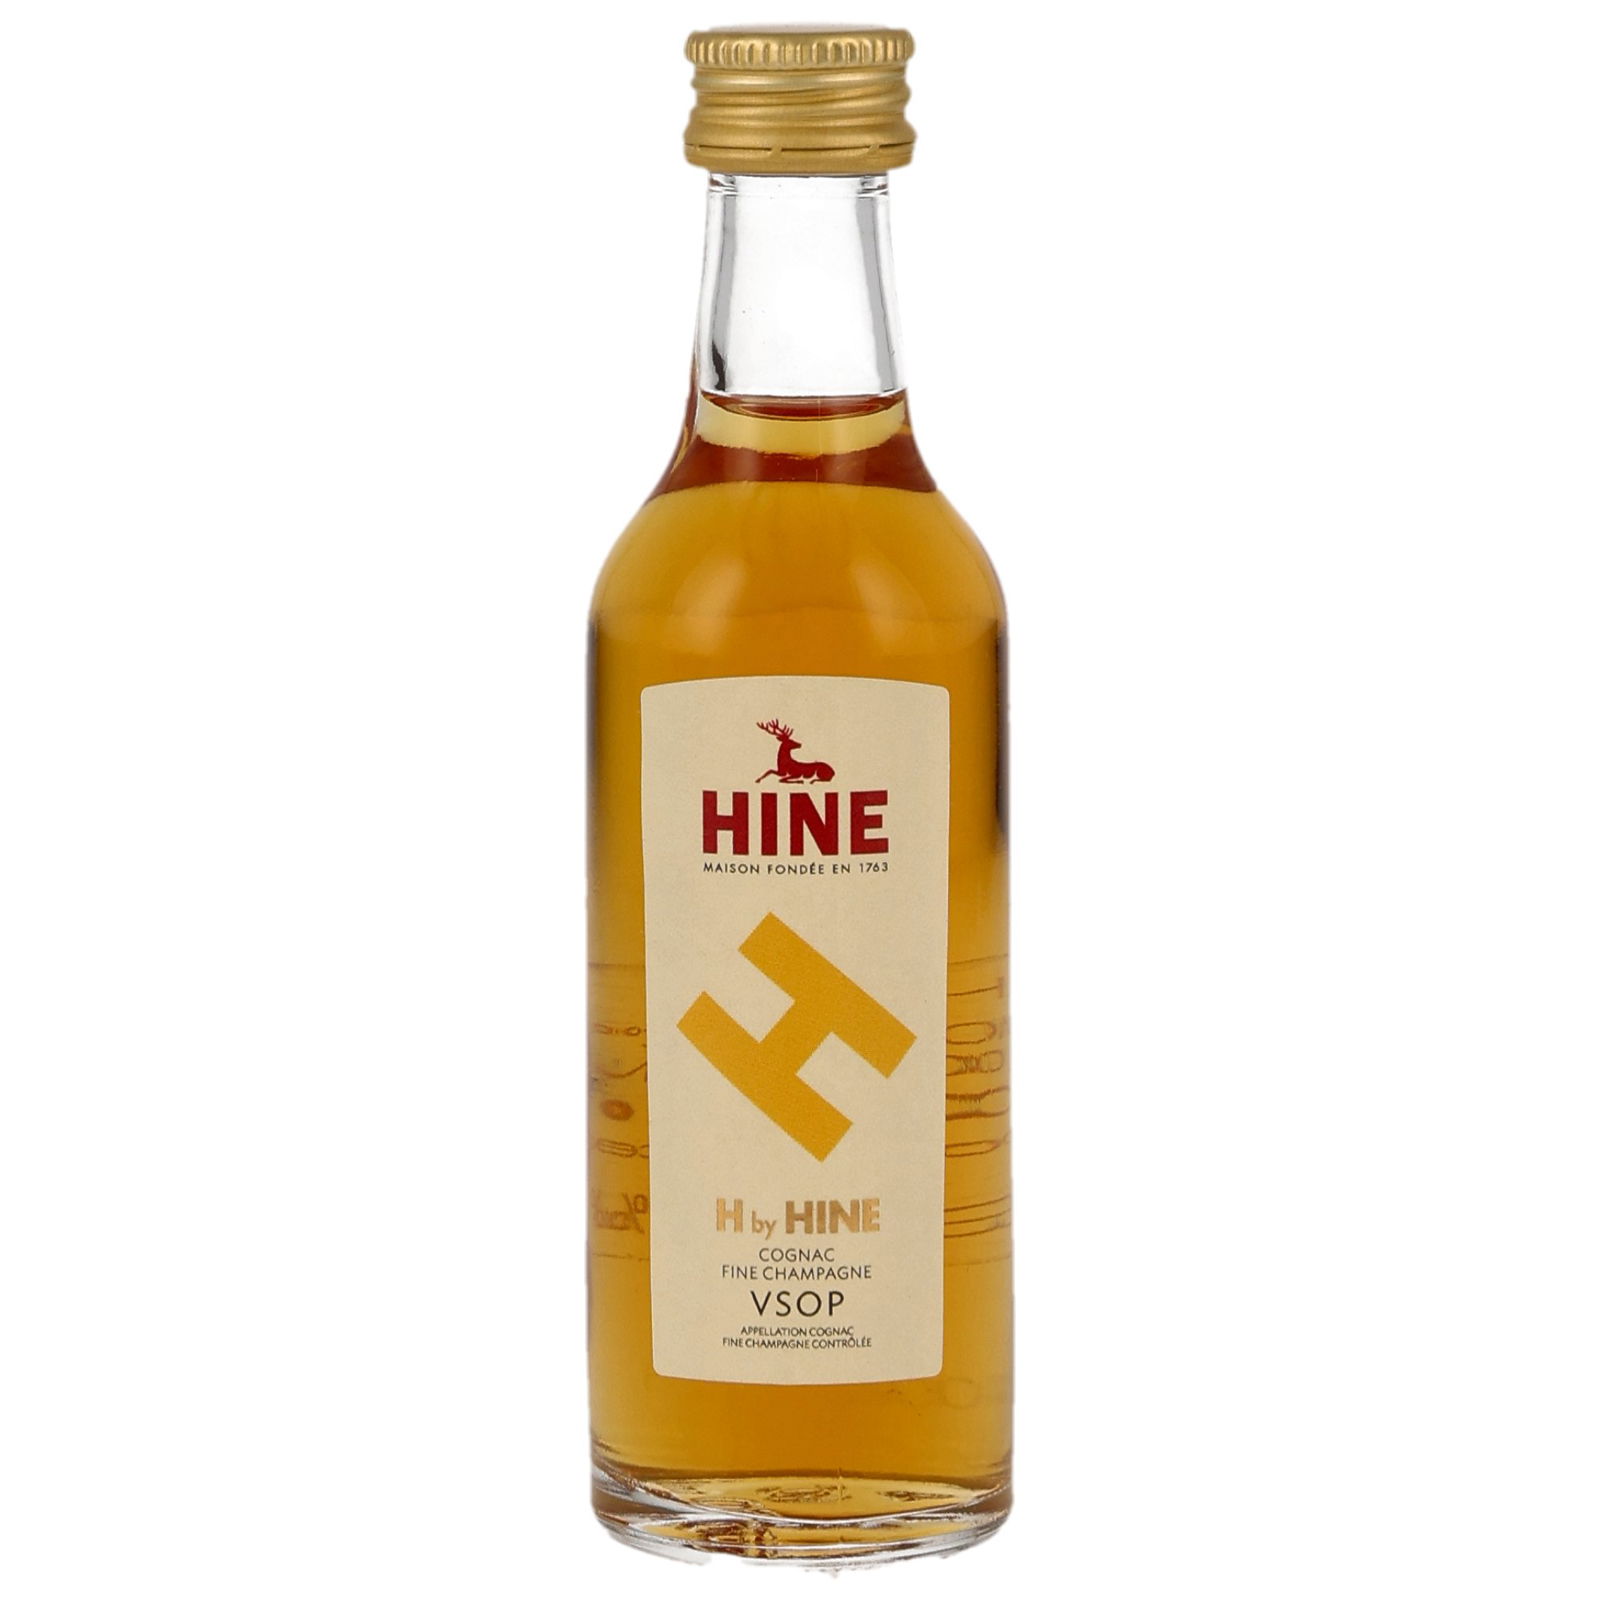 Hine - H by Hine Cognac VSOP (50ml Miniatur)